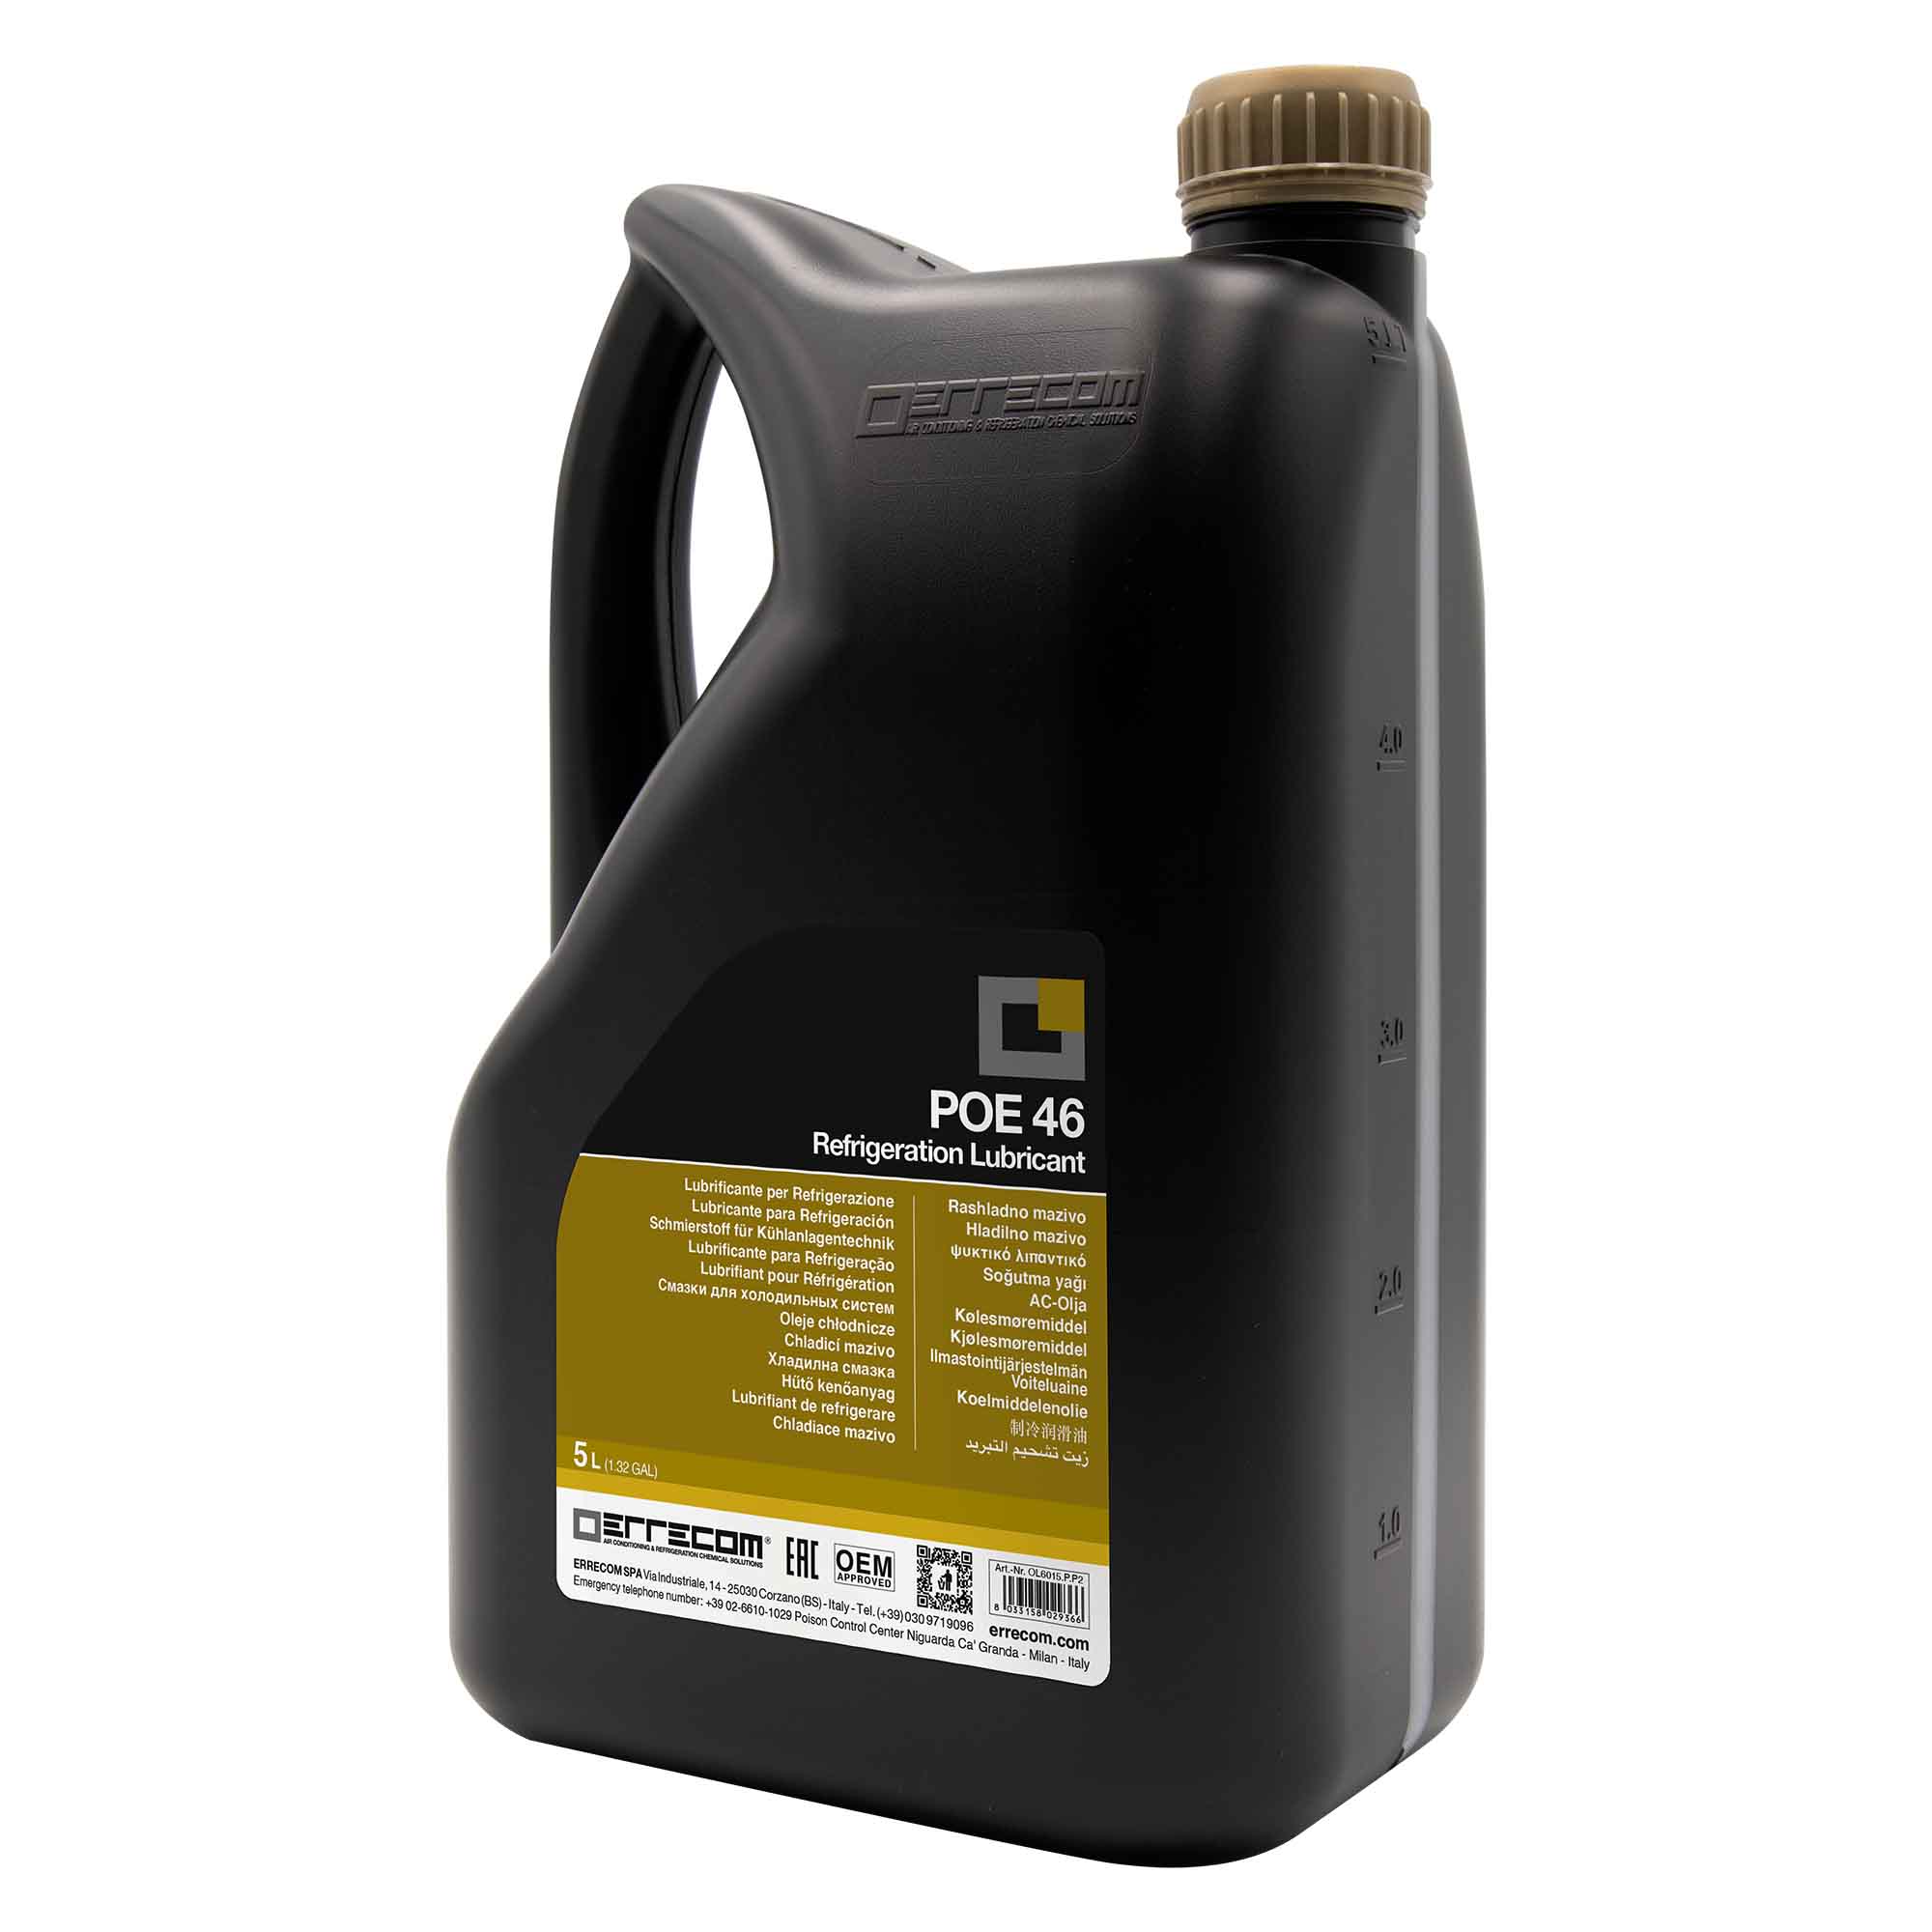 2 x R&AC Polyol Ester (POE) lubricant oil Errecom 46 - Plastic Tank 5 lt. - Package # 2 pcs. (total 10 liters)